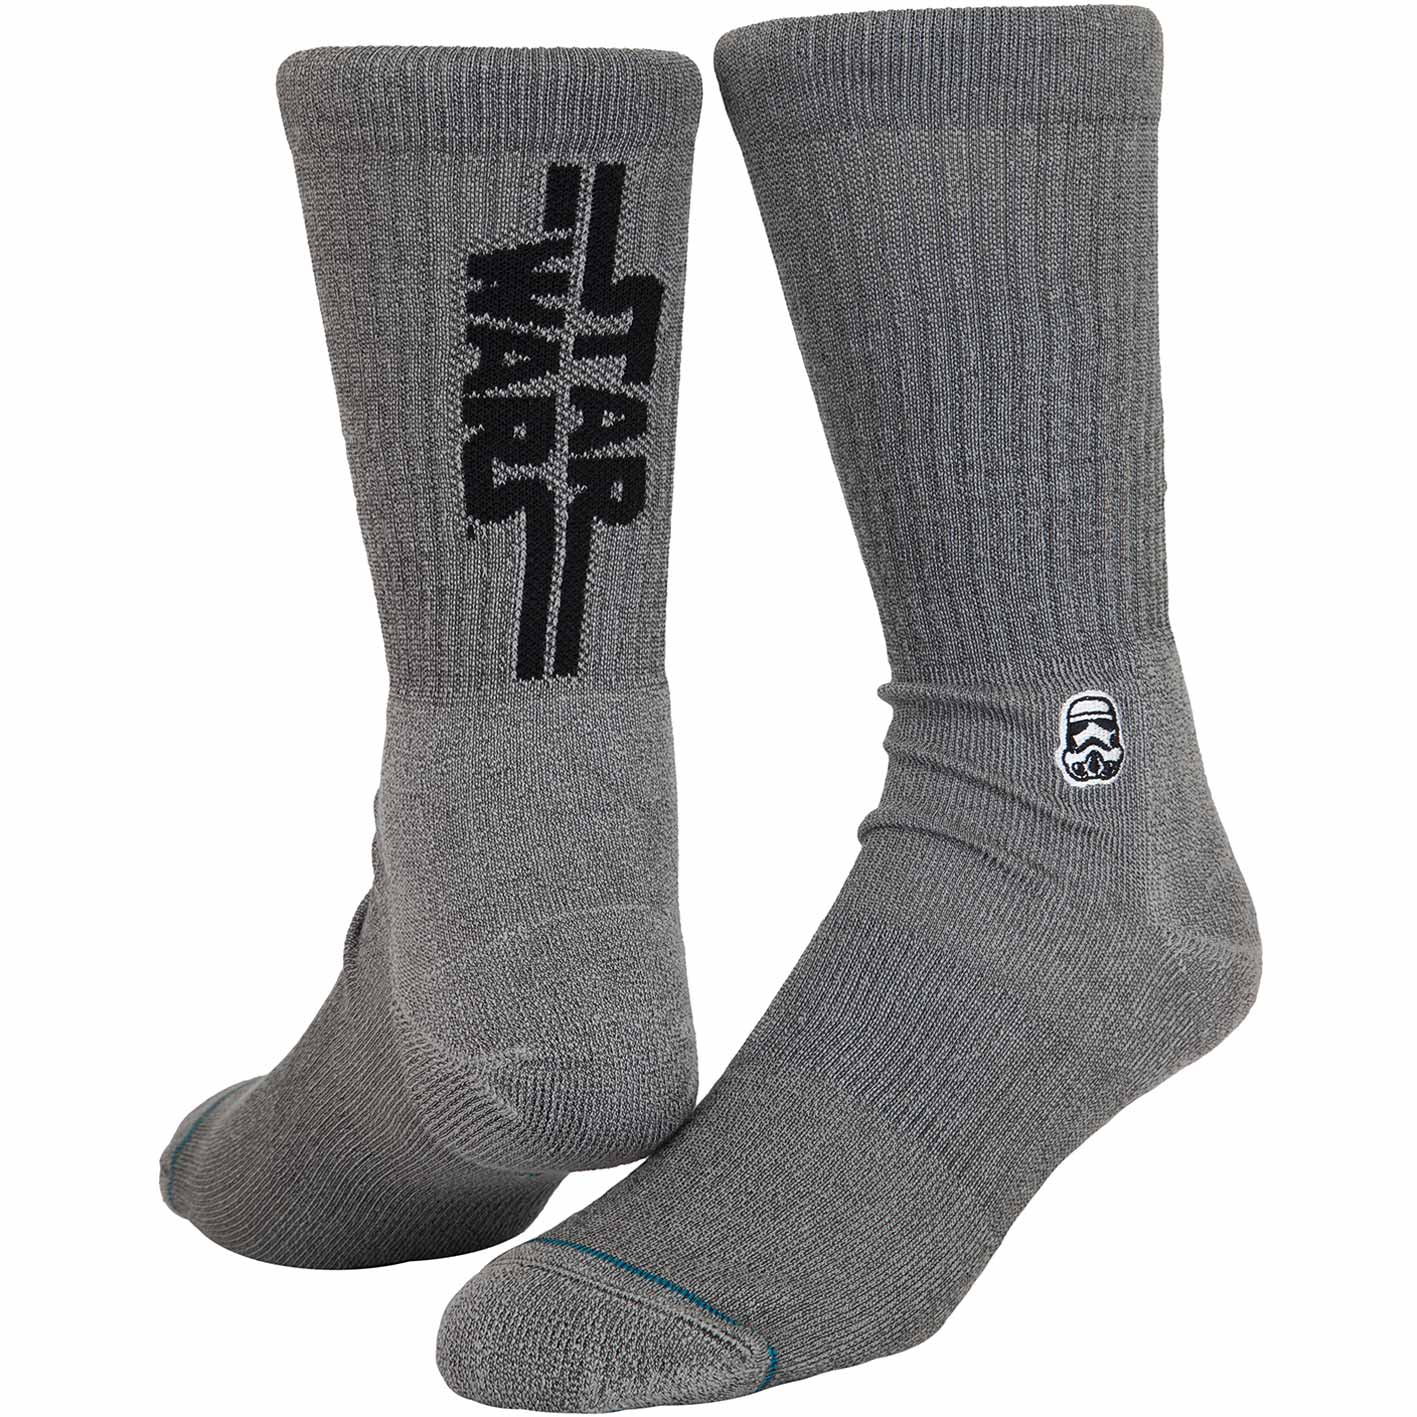 ☆ Stance Socken Star Wars Solid Trooper grau/schwarz - hier bestellen!